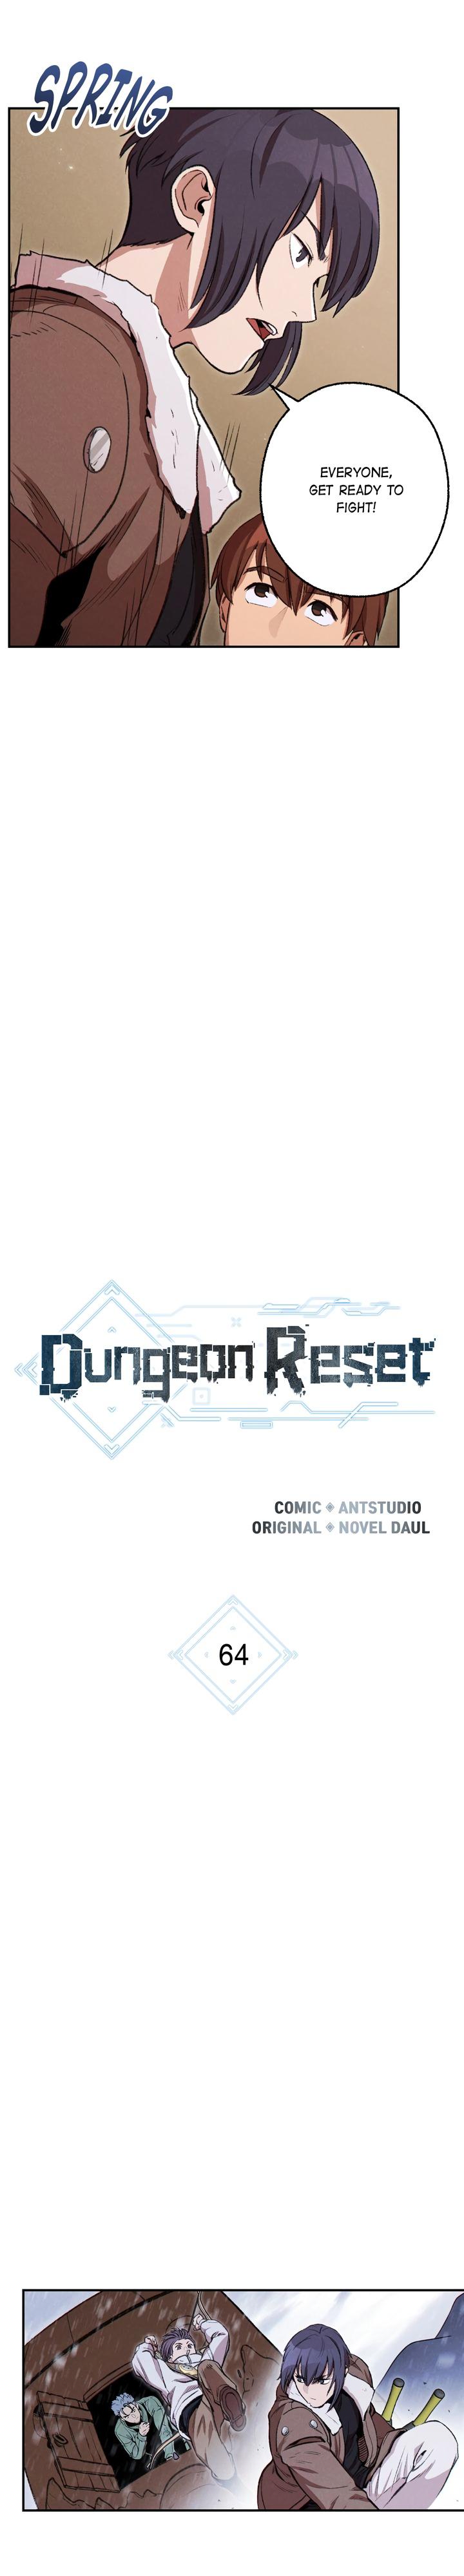 Dungeon Reset, Episode 64 image 02